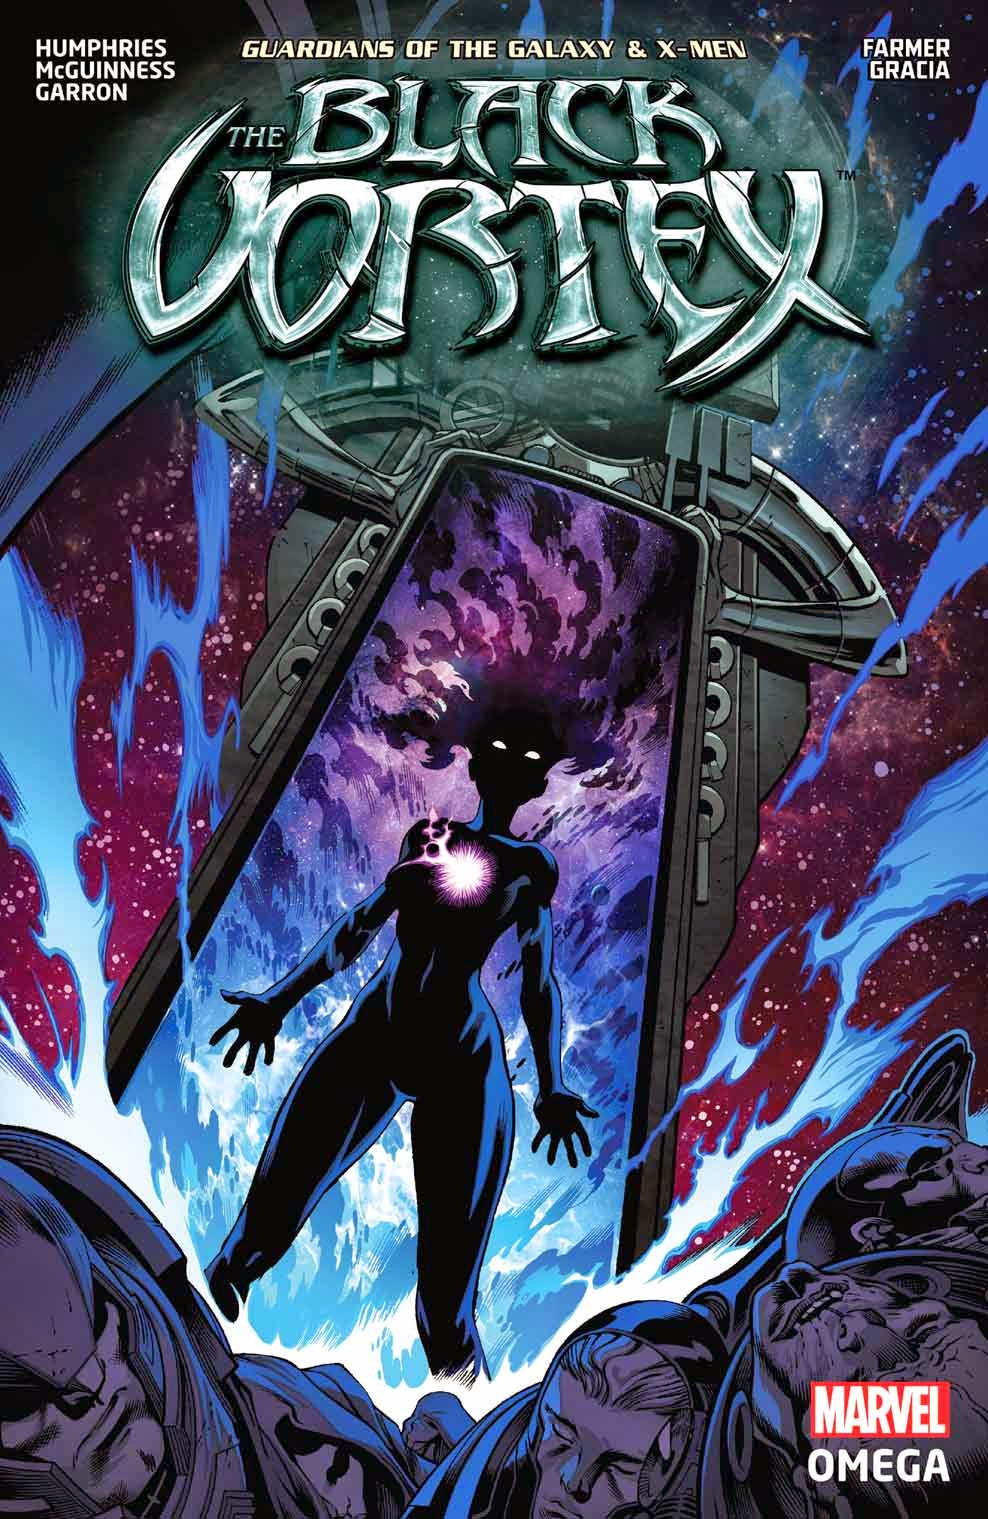 Black Vortex Omega #1